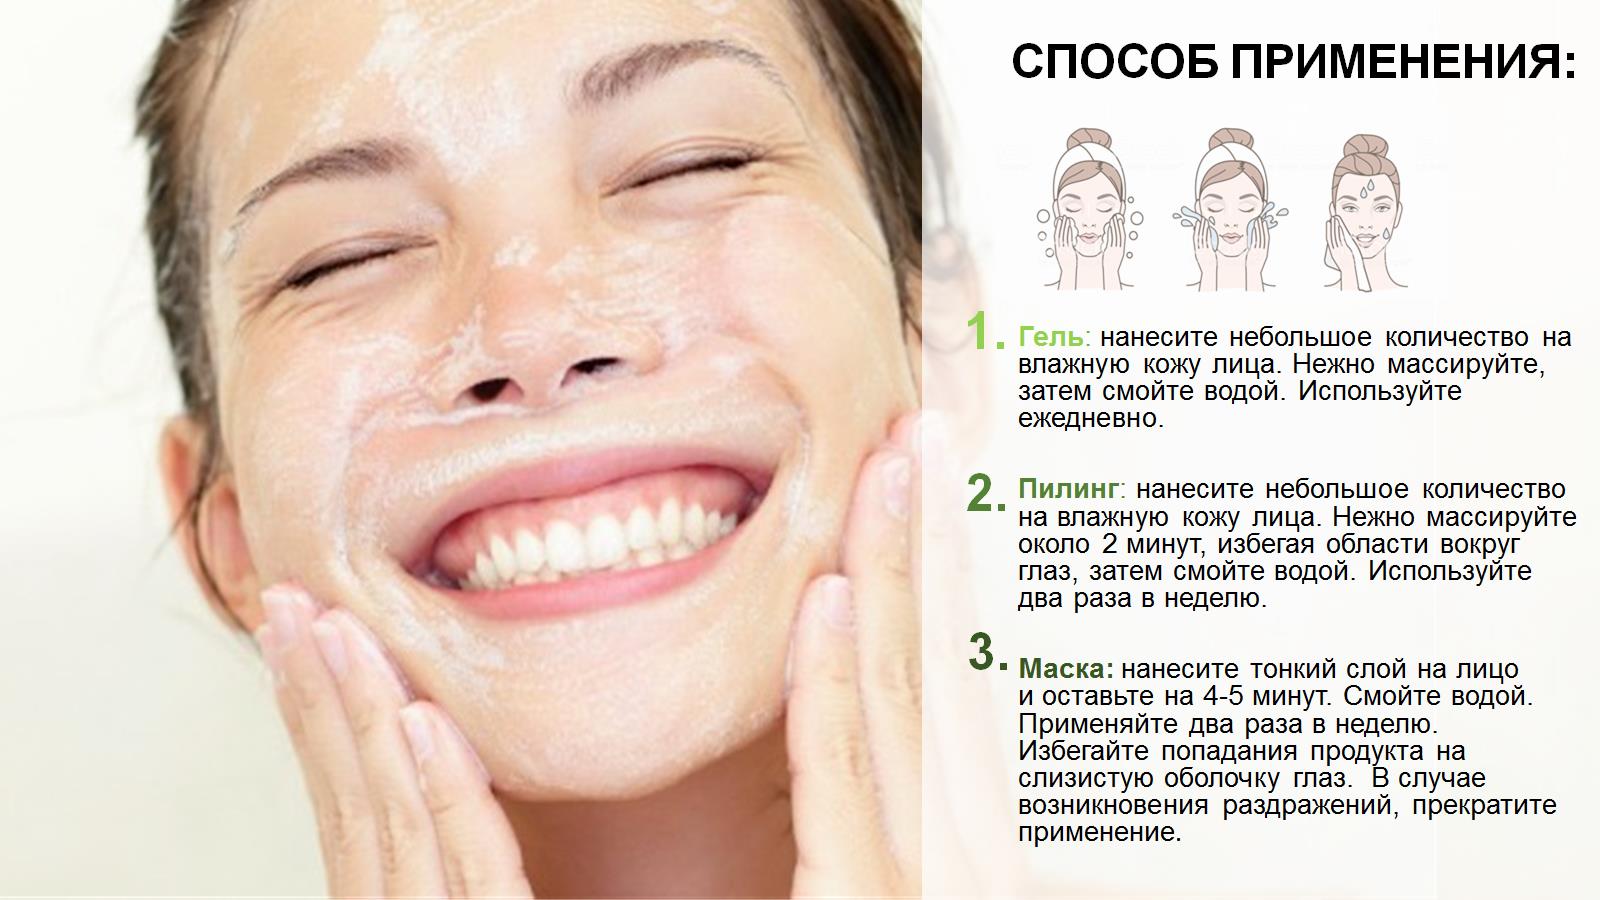 Очищающий гель 3-в-1 Pure therapy Aha Face Cleanser 3 in 1 Lambre